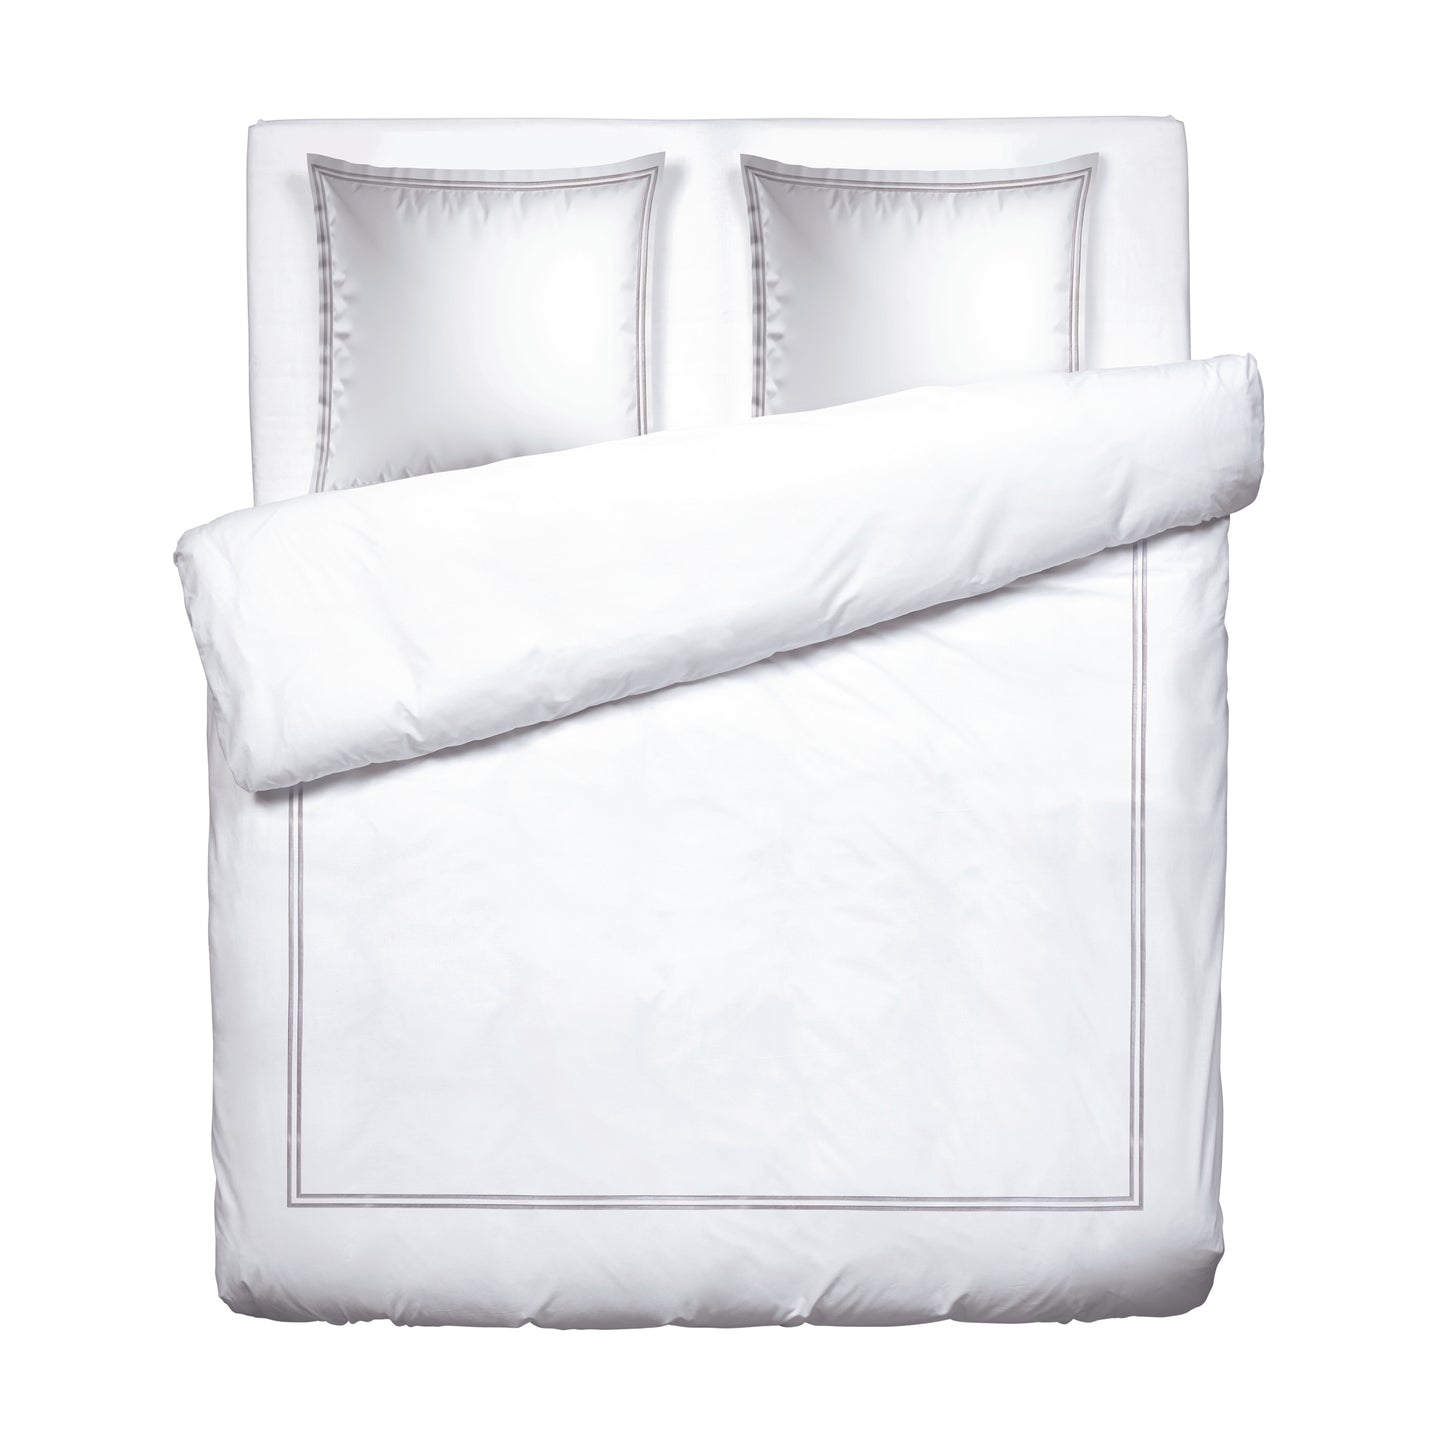 Duvet cover + pillowcase(s) cotton satin - Nice White / Silver